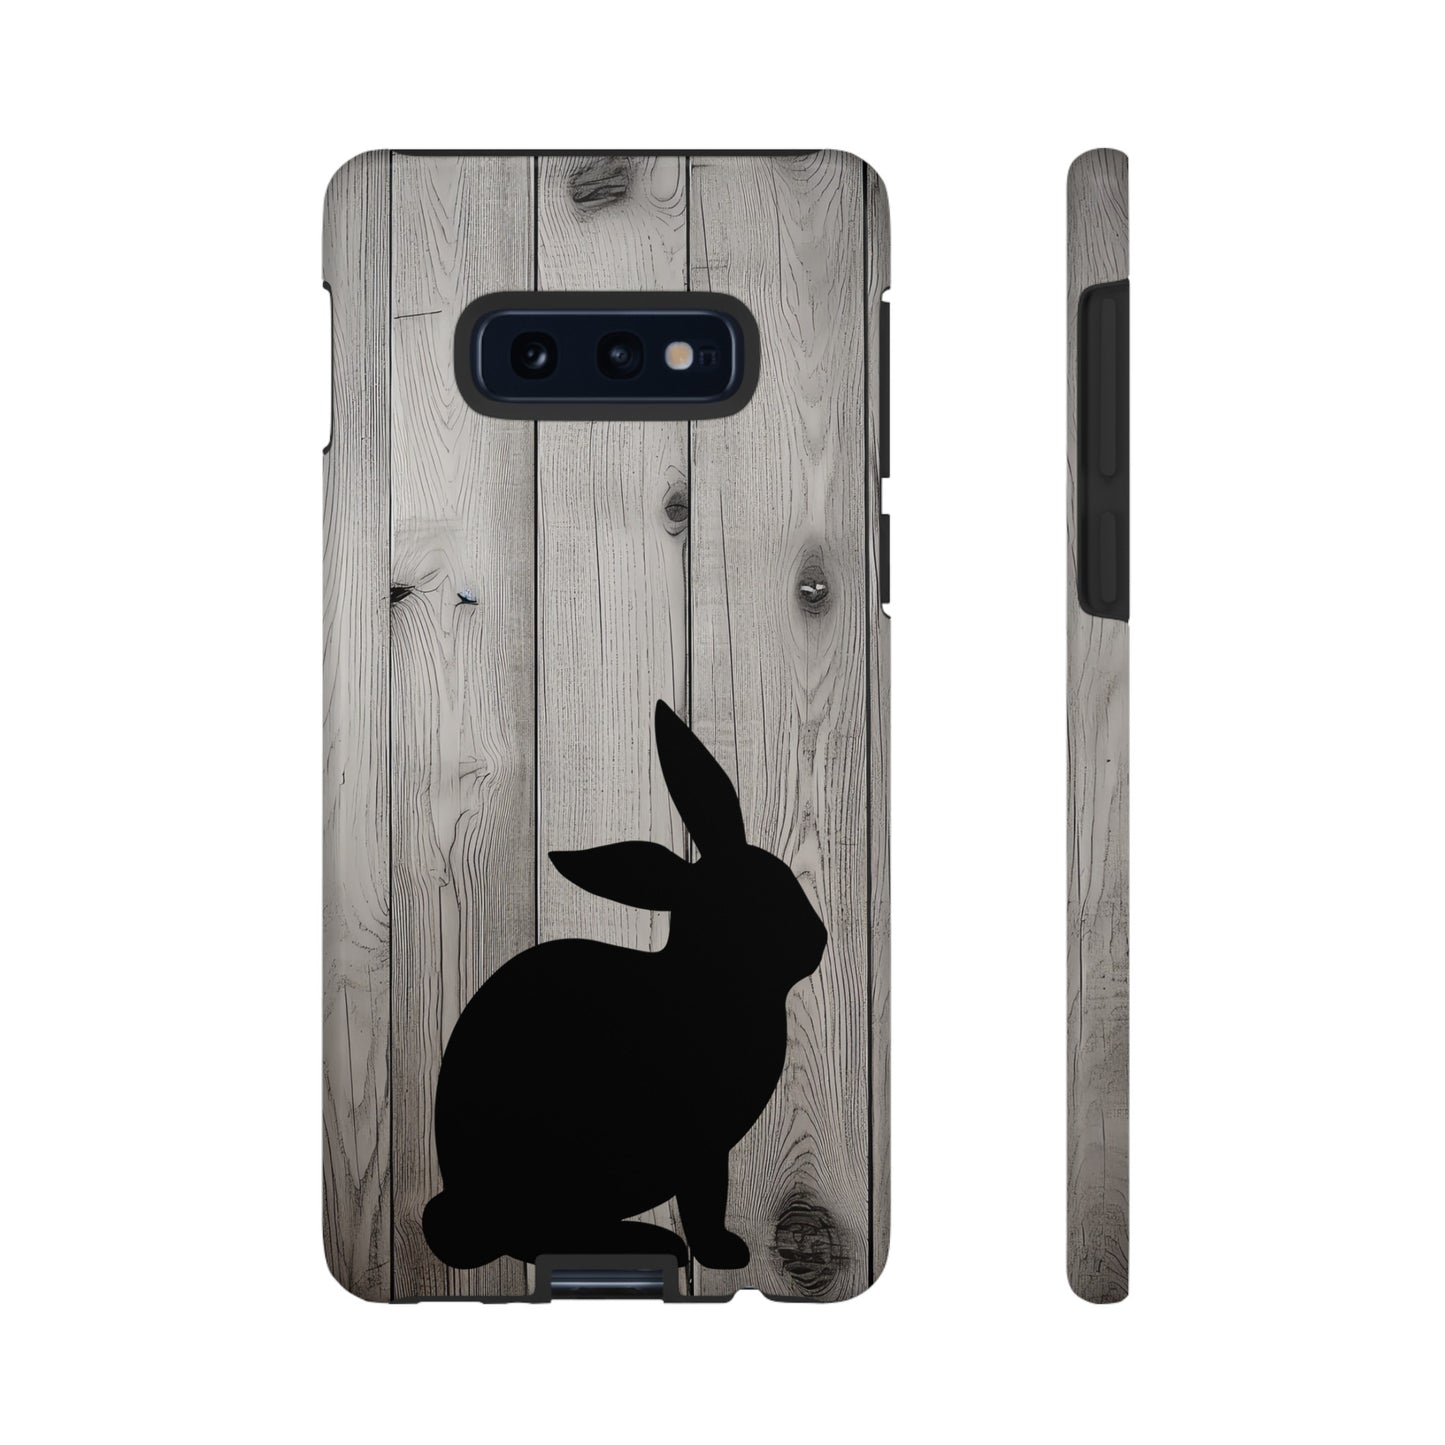 Livestock Show Rabbit Phone Cases - Android Rabbit Phone Cases